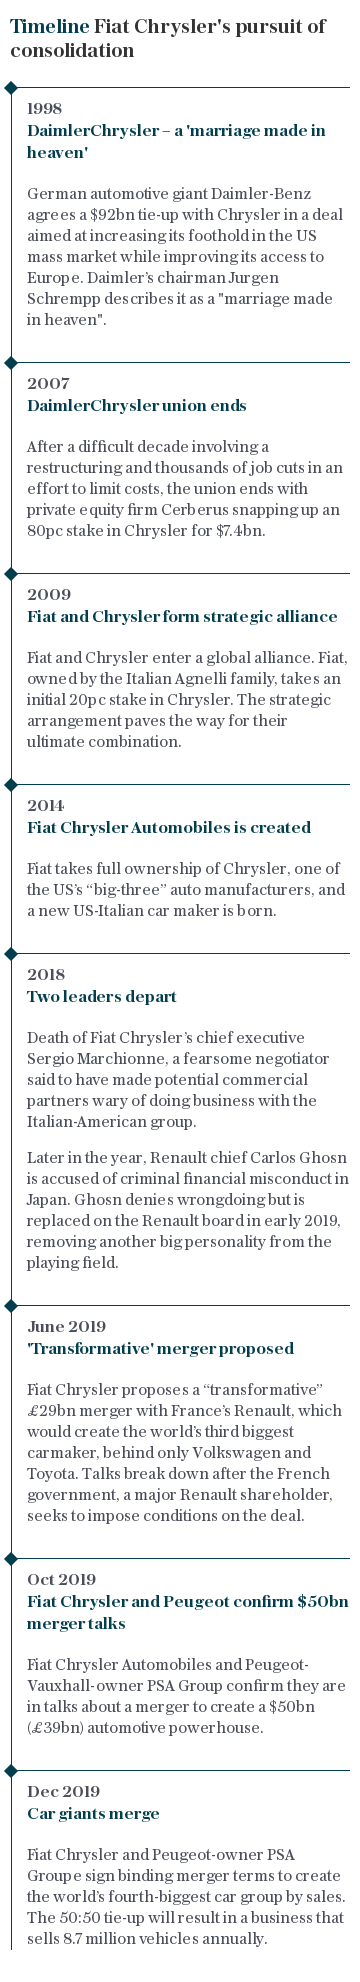 Timeline - Fiat Chrysler Automobiles